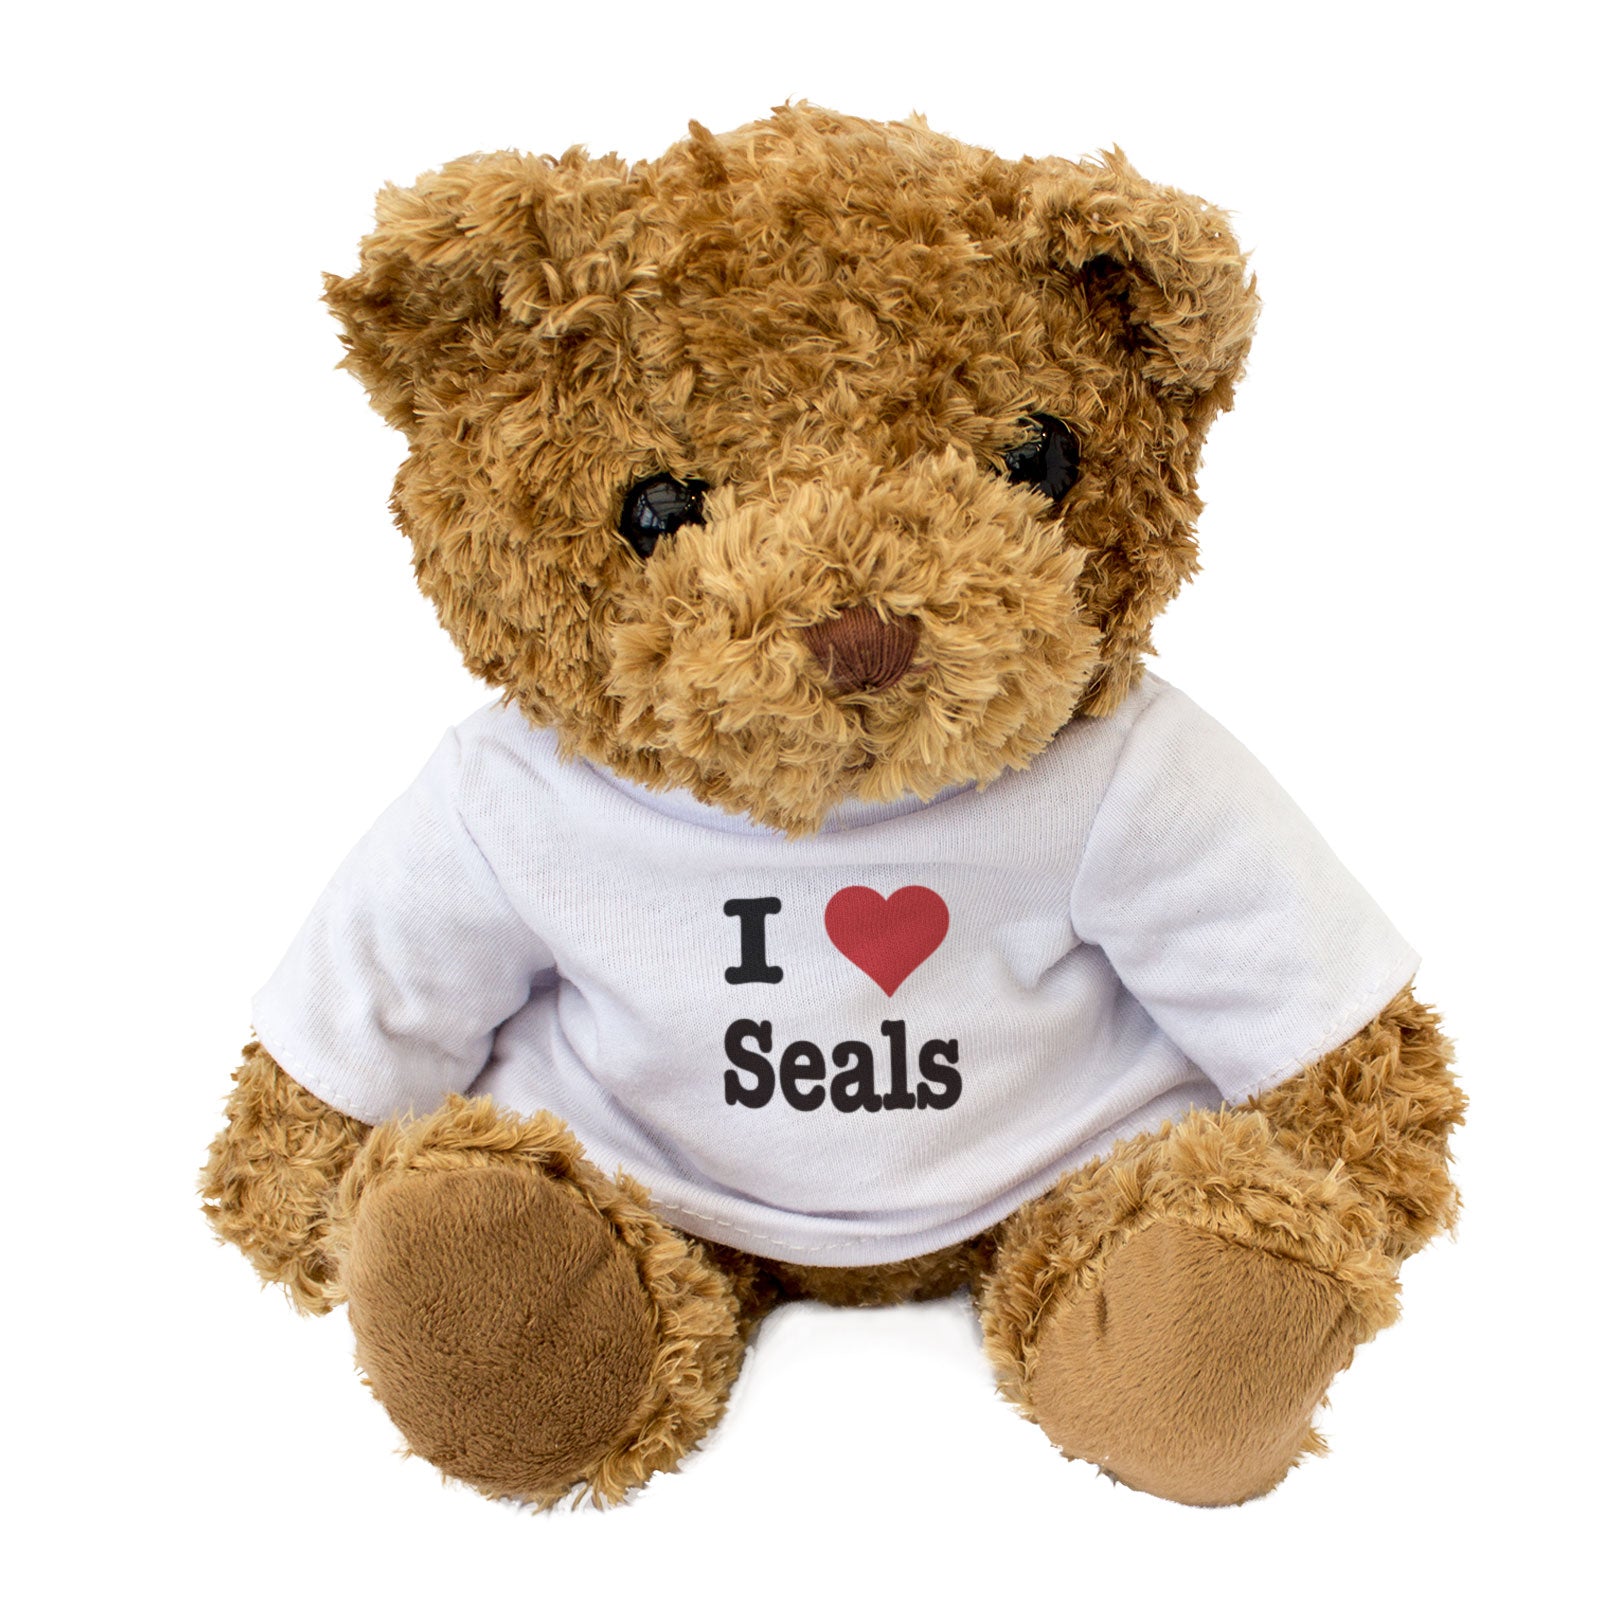 I Love Seals - Teddy Bear